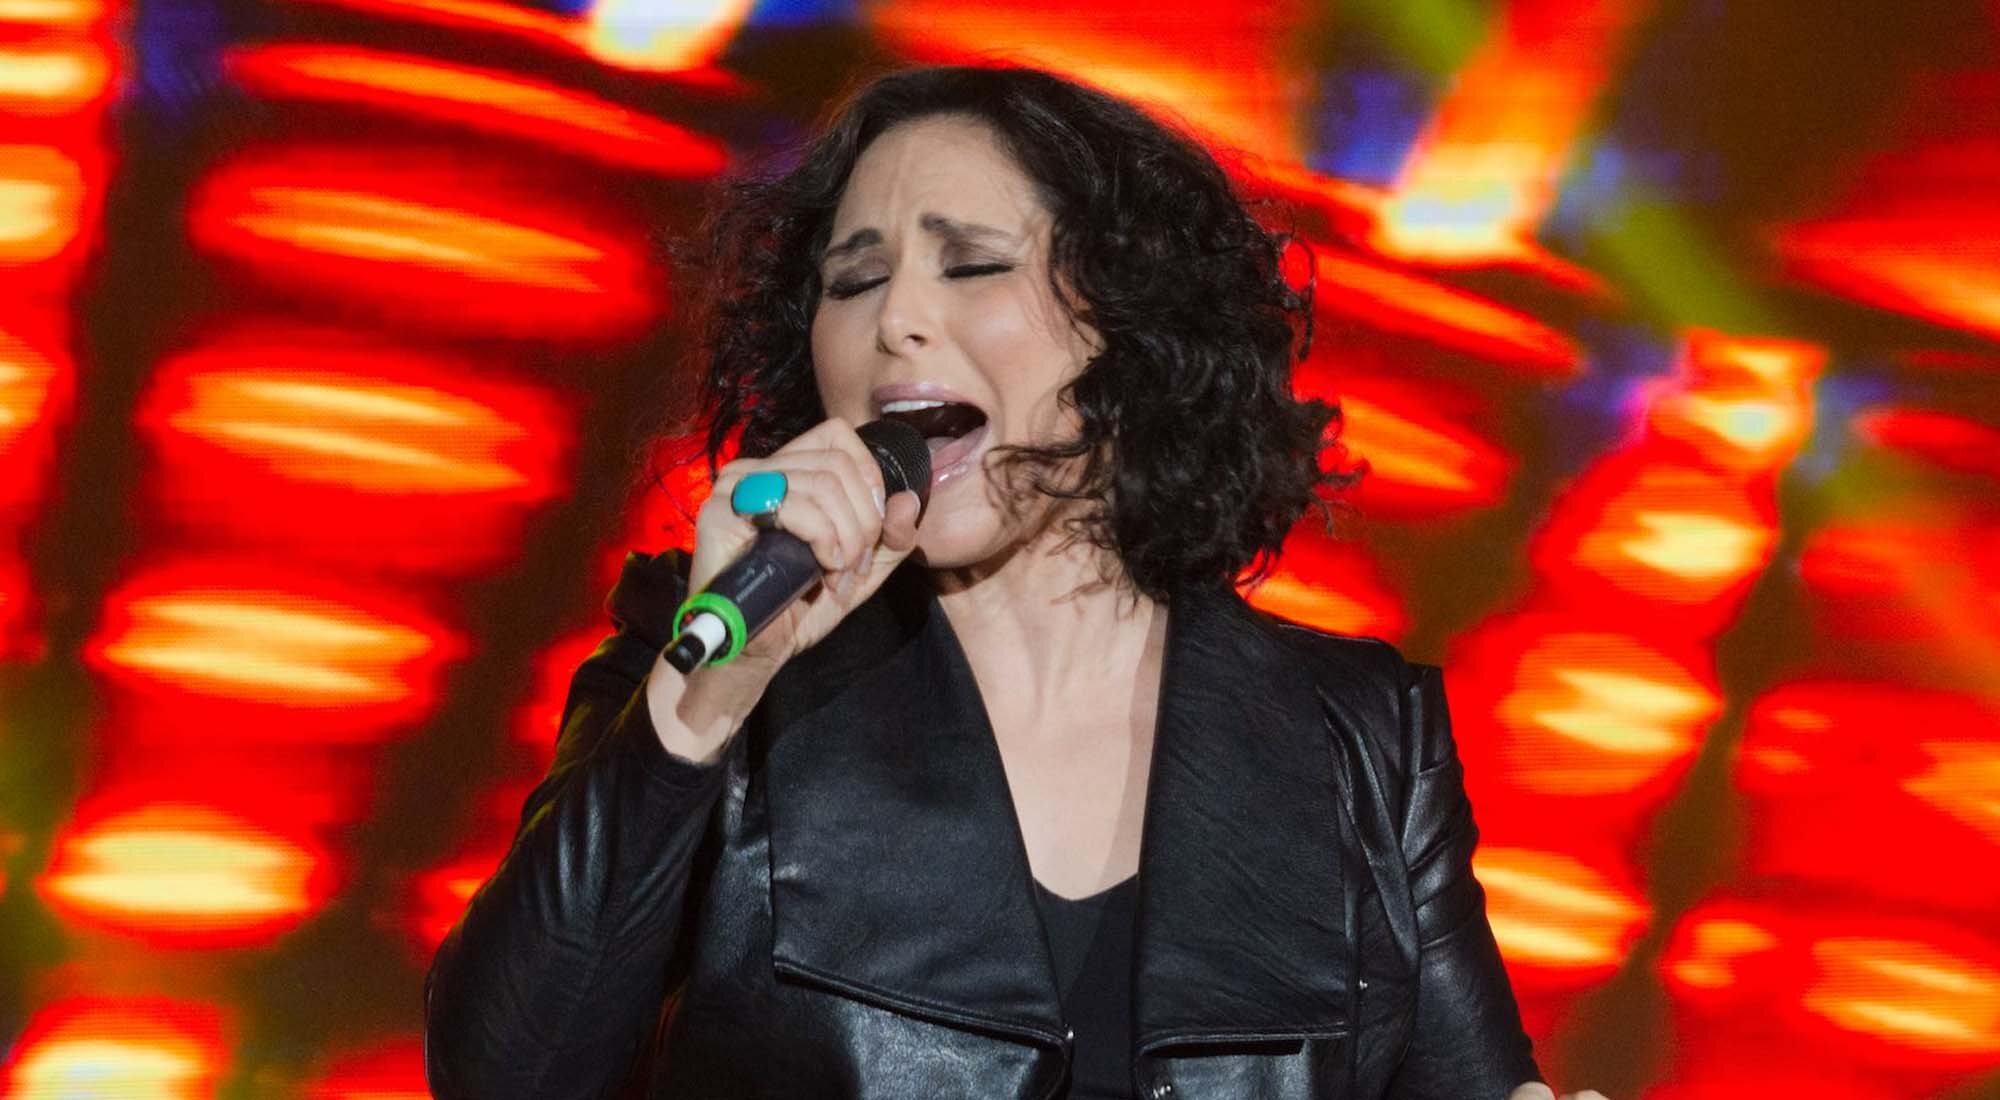 Rosa López interpretando "Europe's living a celebration" en la PreParty de 2019, celebrada en Madrid